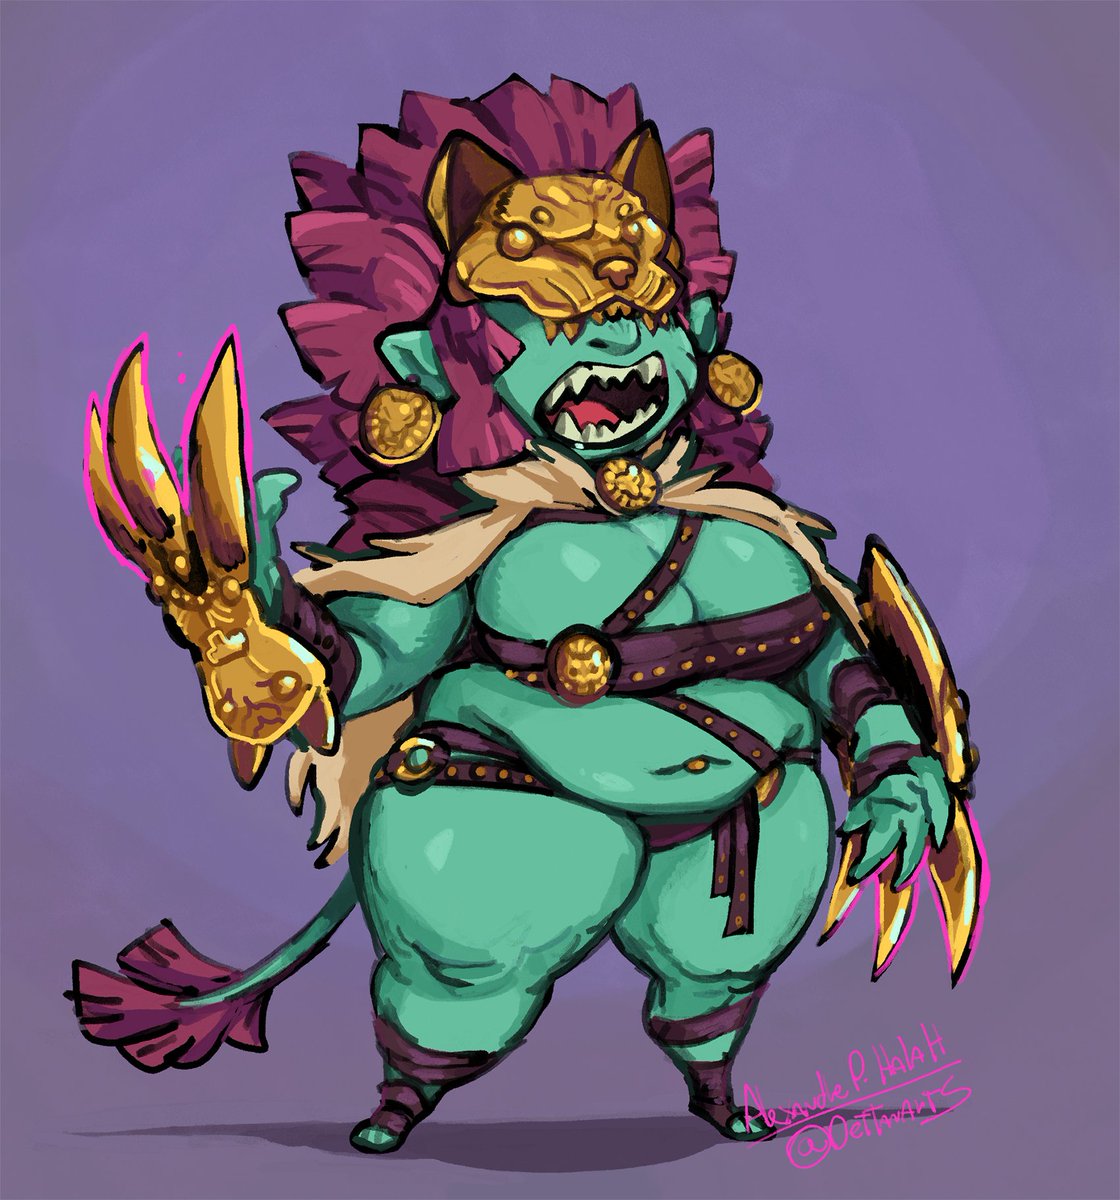 random goblin warrior doodle from last night ~ she's fierce and feral !